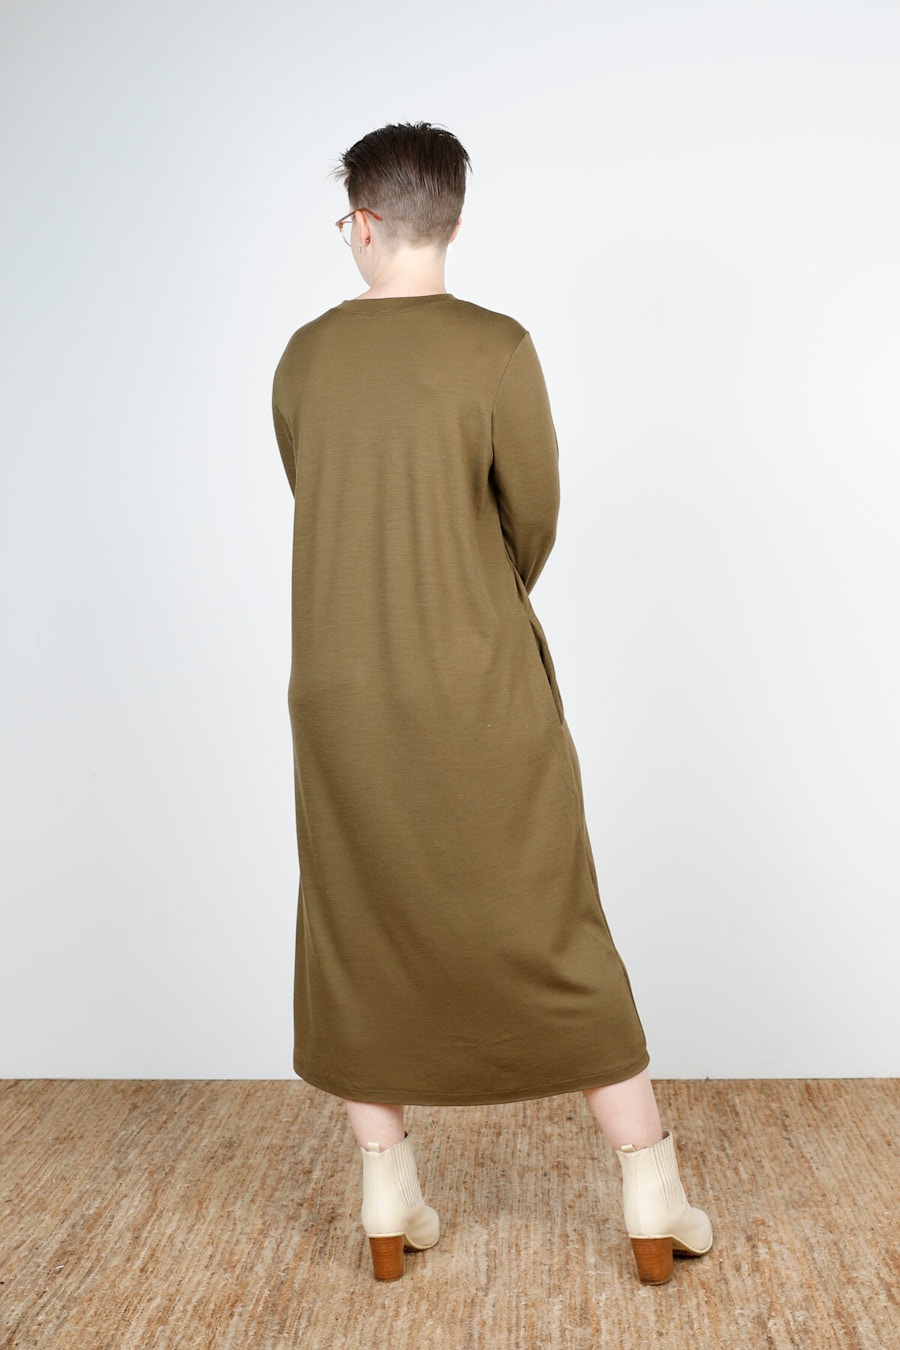 Back Olive Mabel Dress Make by TFS Stay Stitch Patterns Beanie